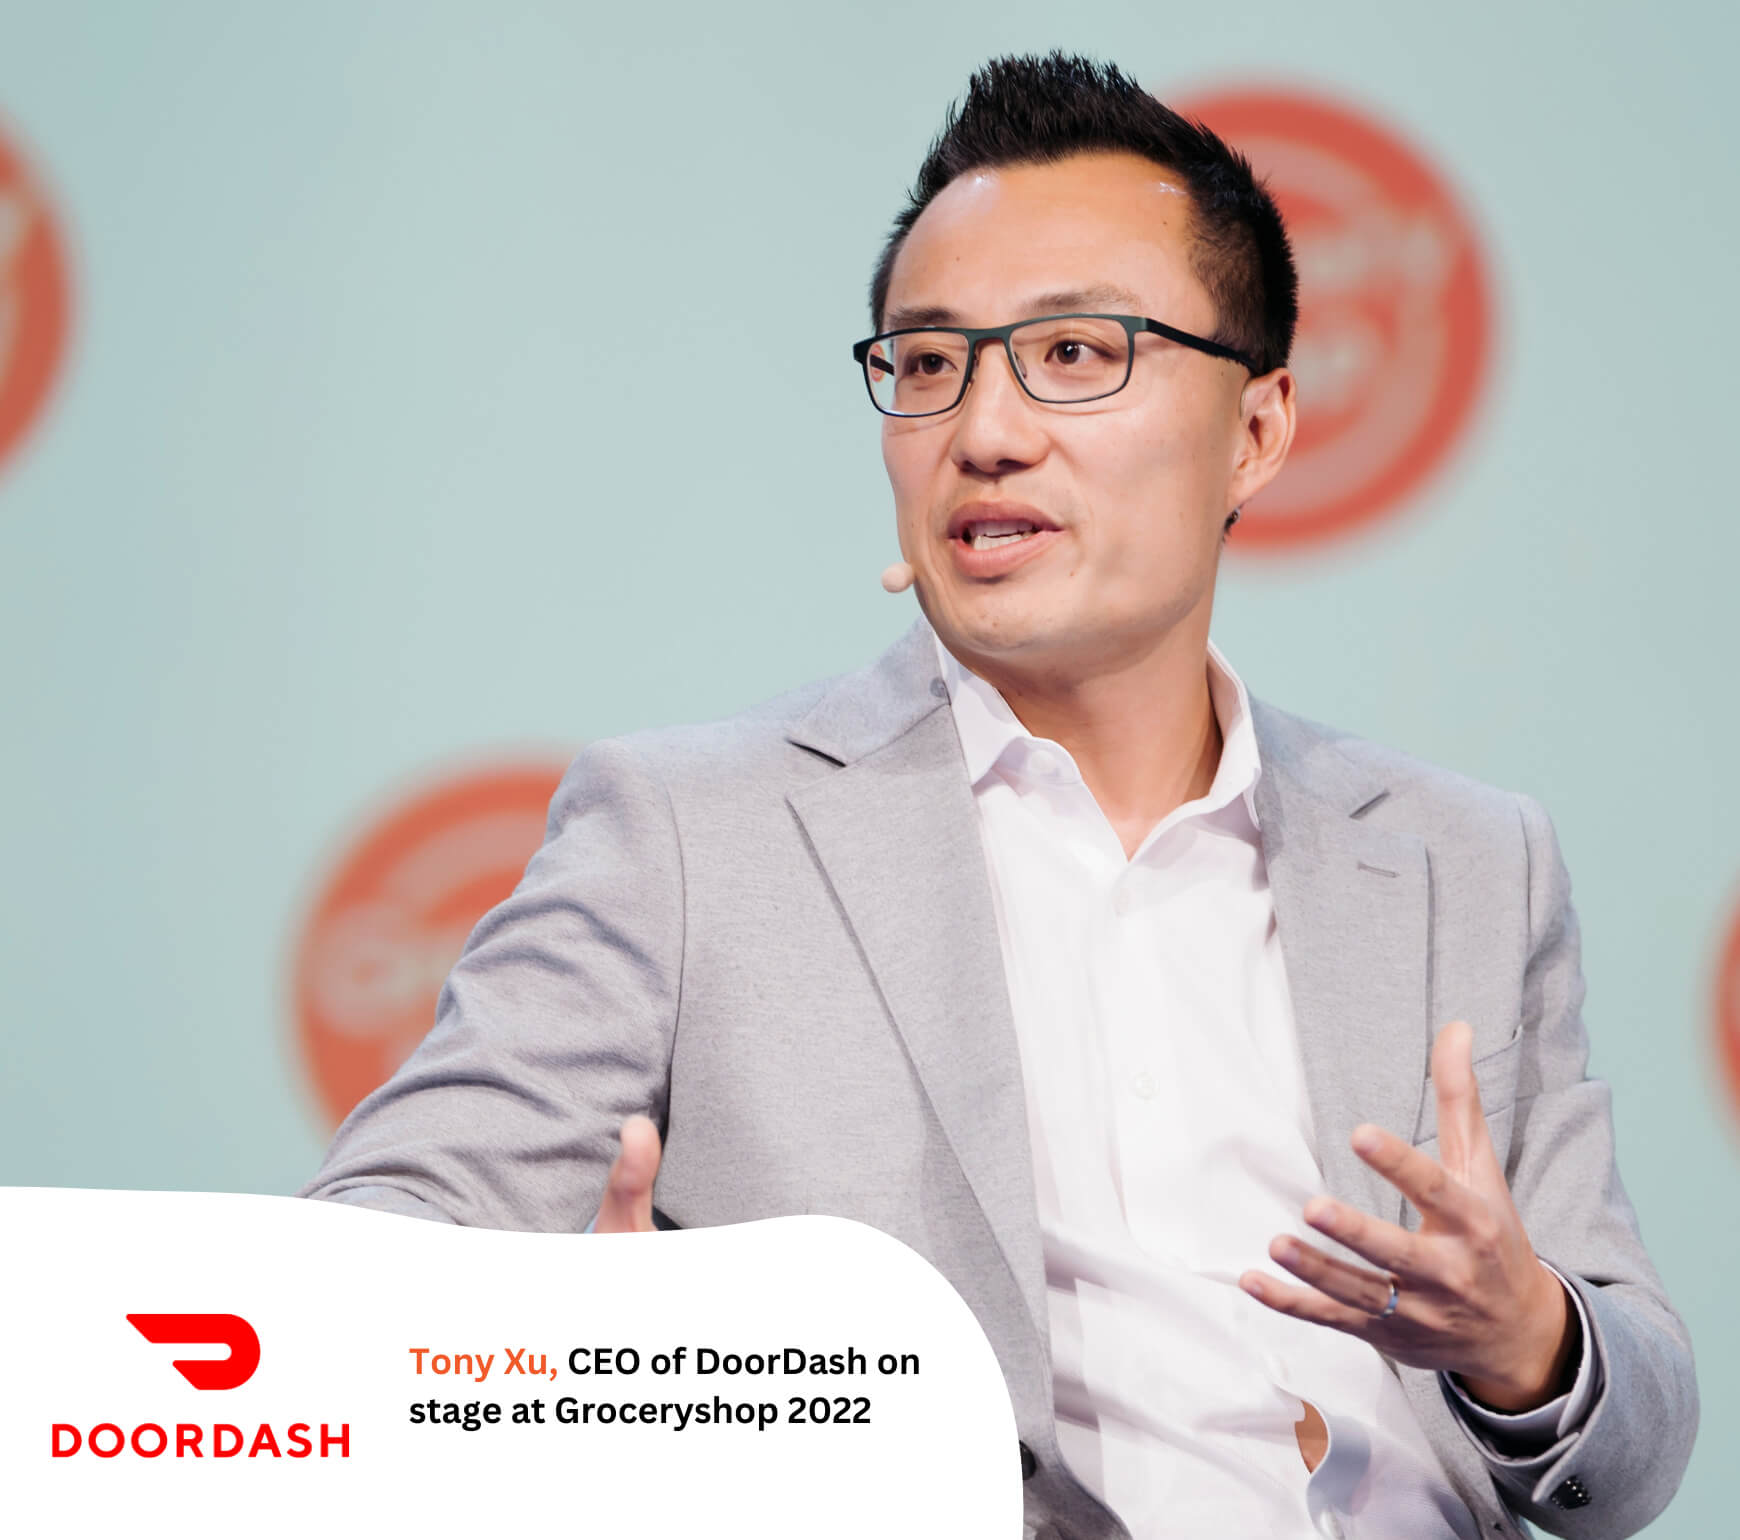 Tony Xu, CEO, DoorDash